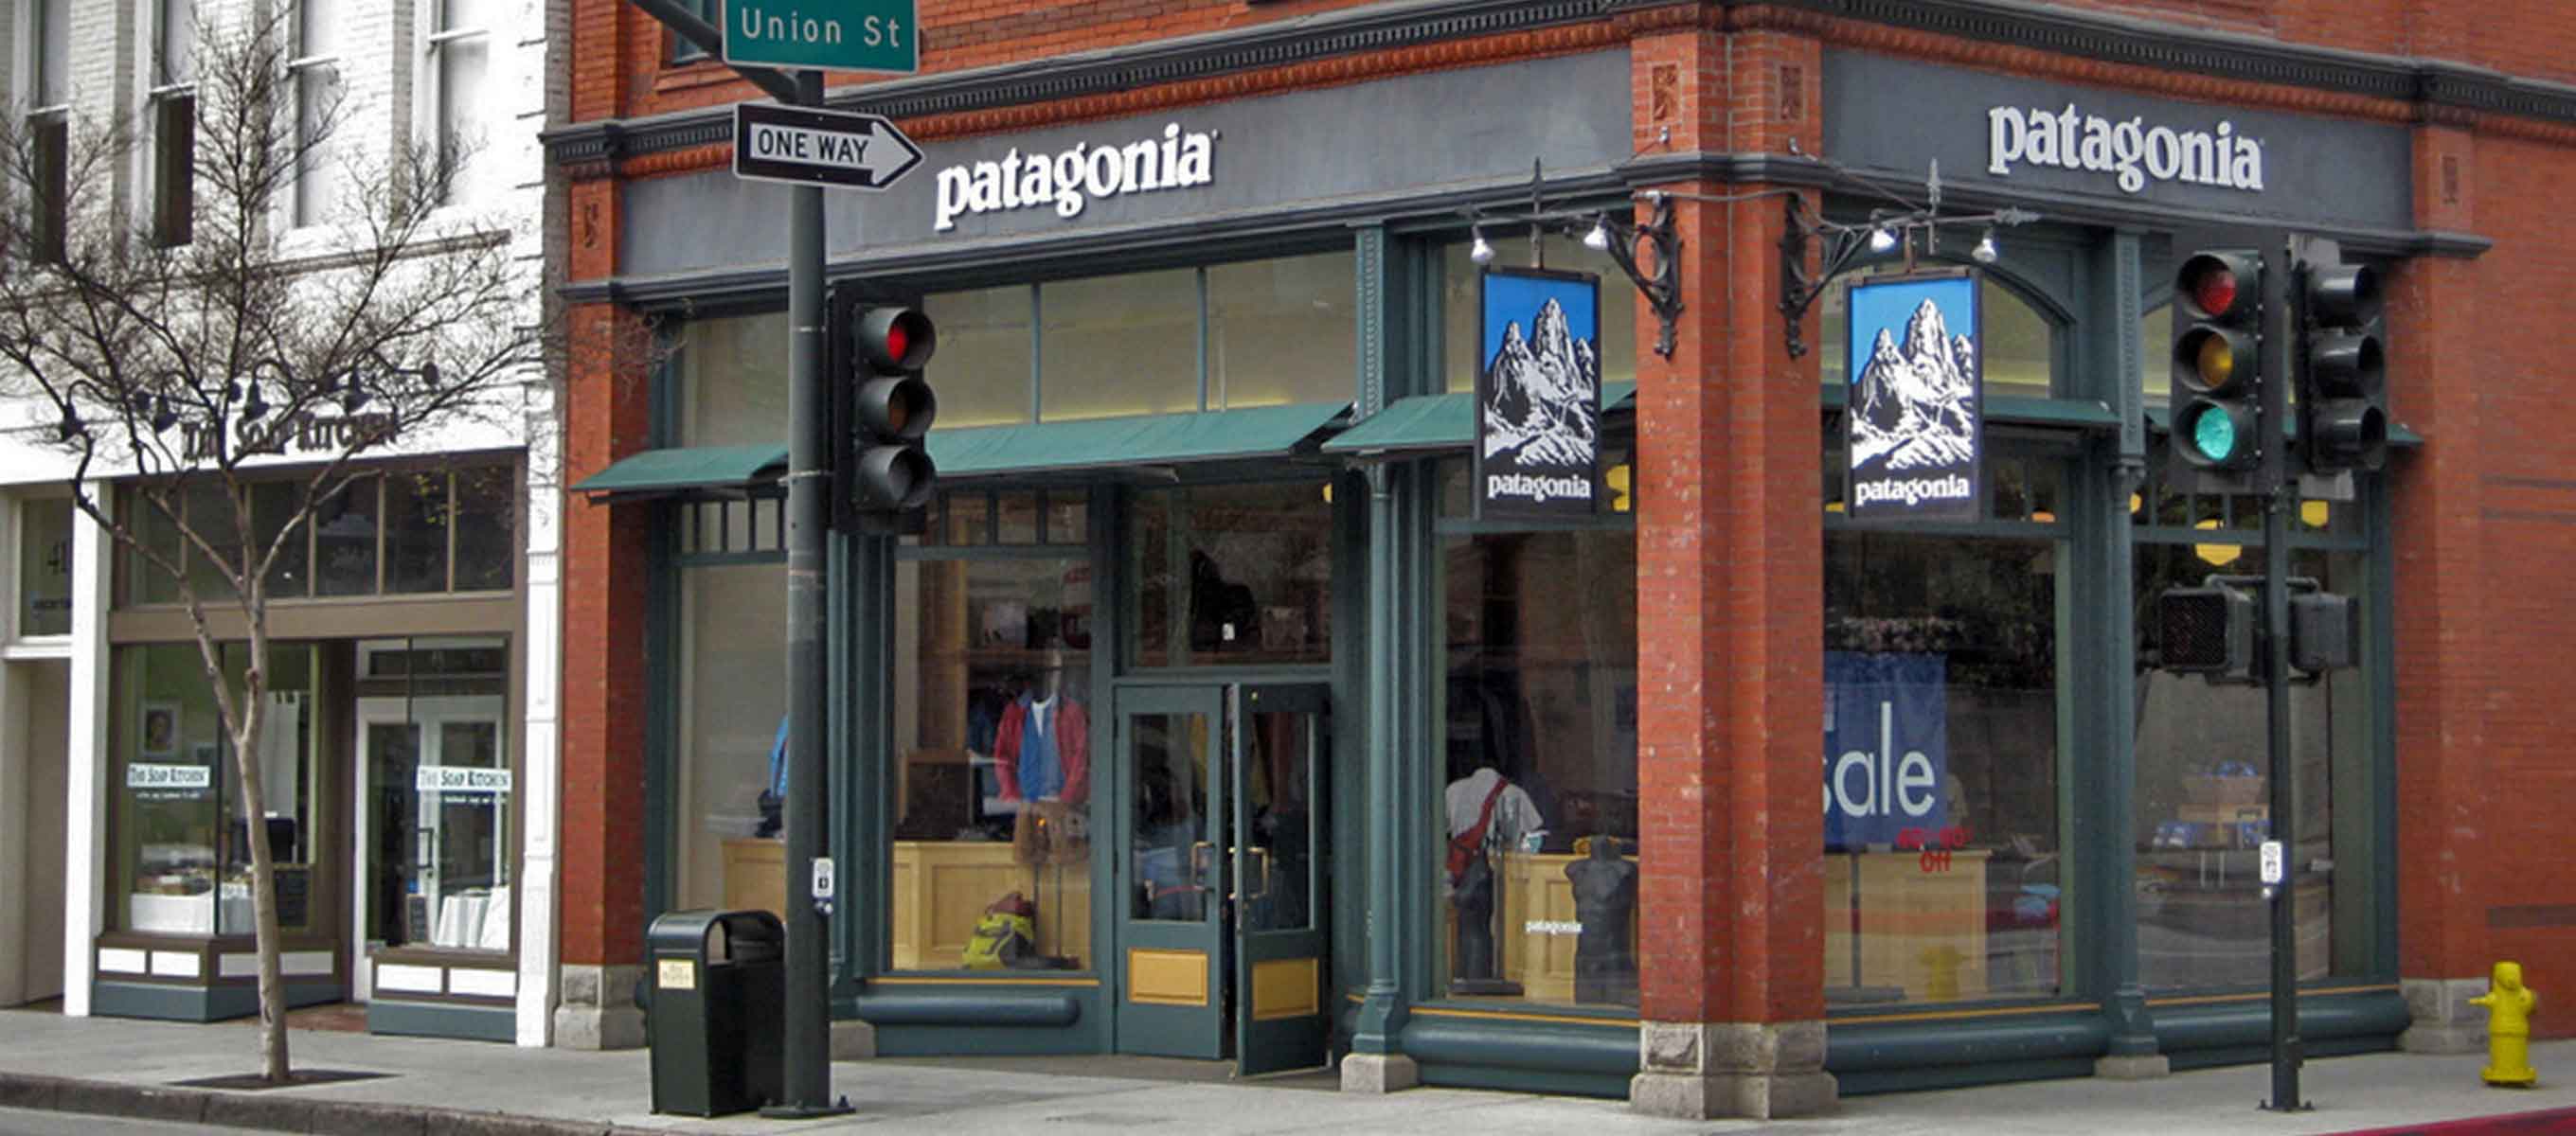 Patagonia Pasadena - Outdoor Clothing Store, Pasadena, CA